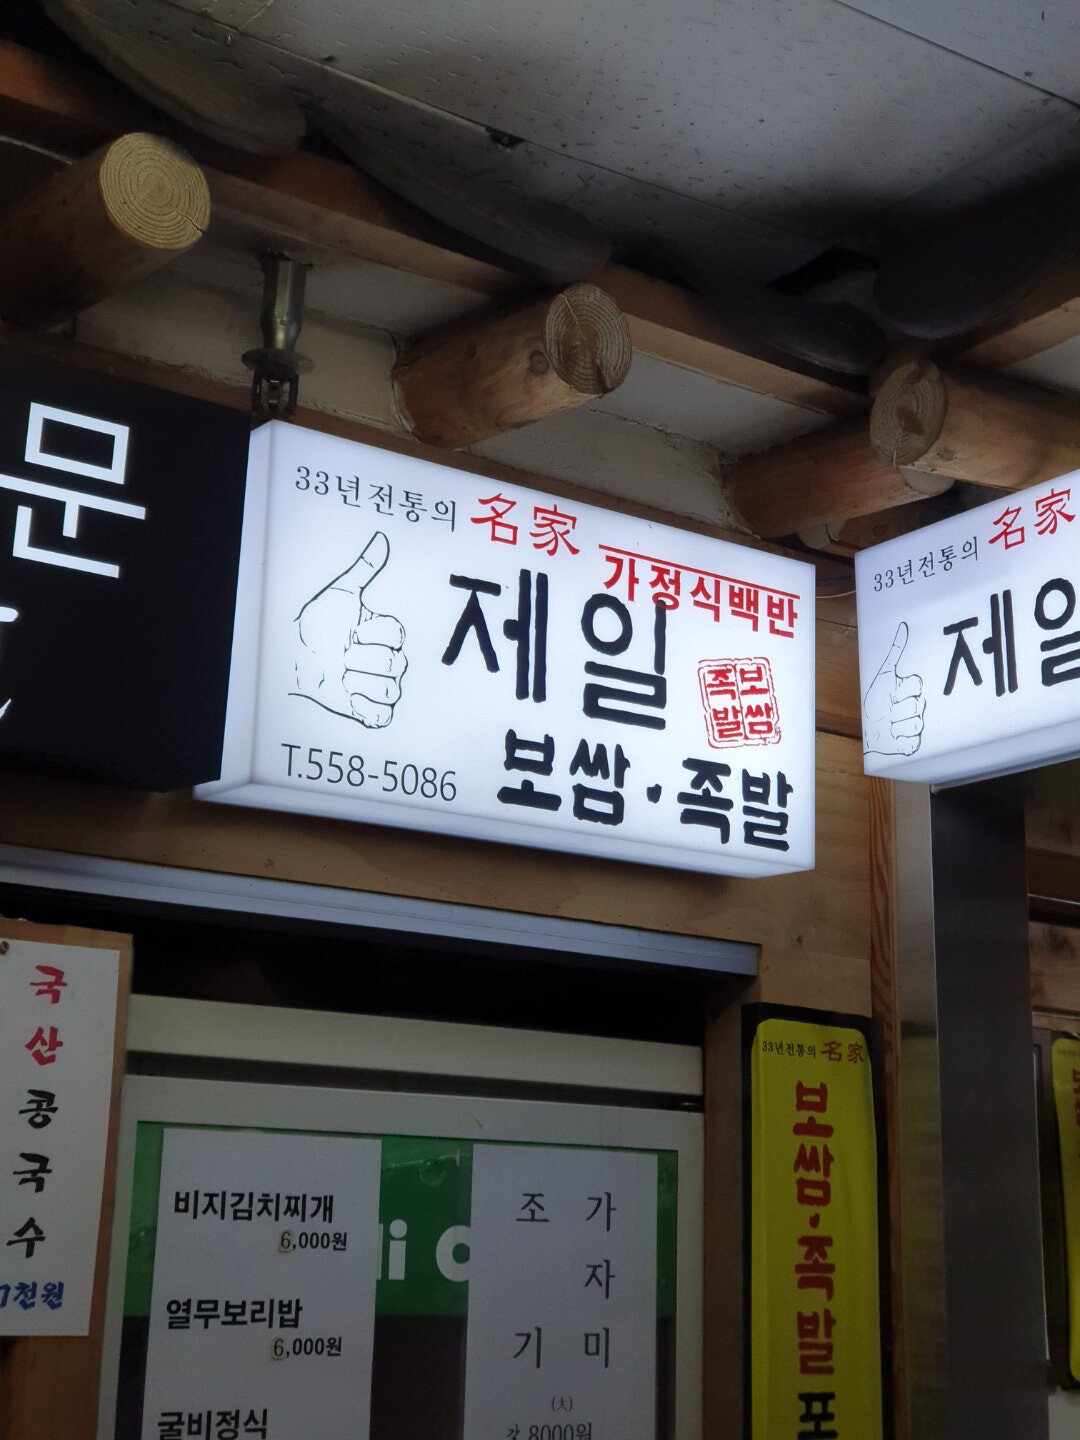 KakaoTalk_Image_2020-08-25-18-02-27_001.jpg (스압) 서울 강남 지역 음식점 방문기 -7-